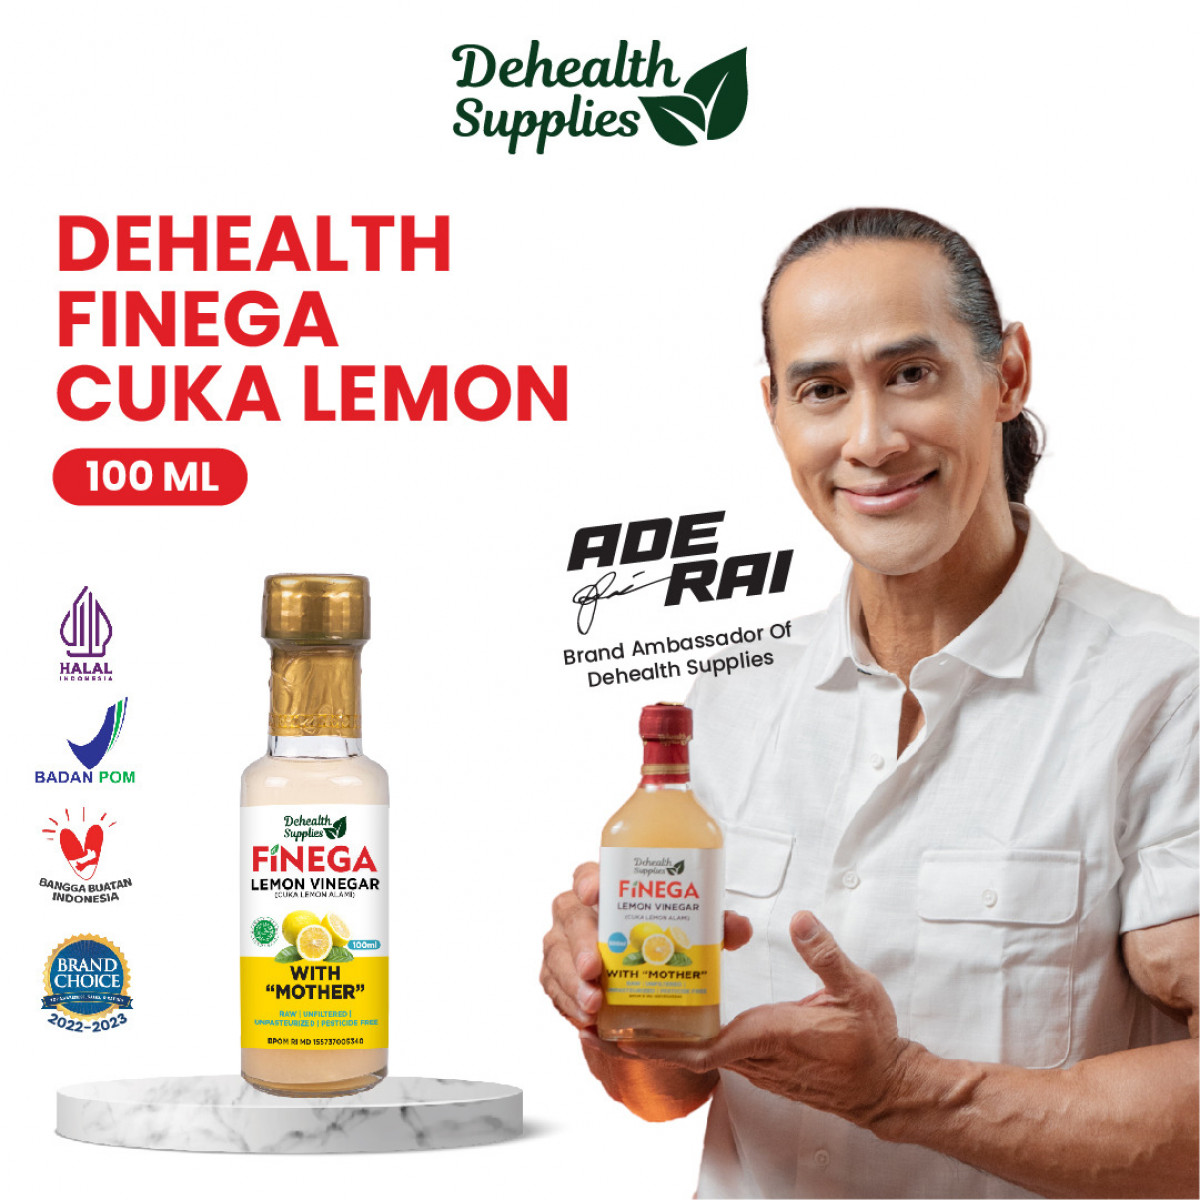 Dehealth Supplies Finega Cuka Lemon 100ml (botol kaca)